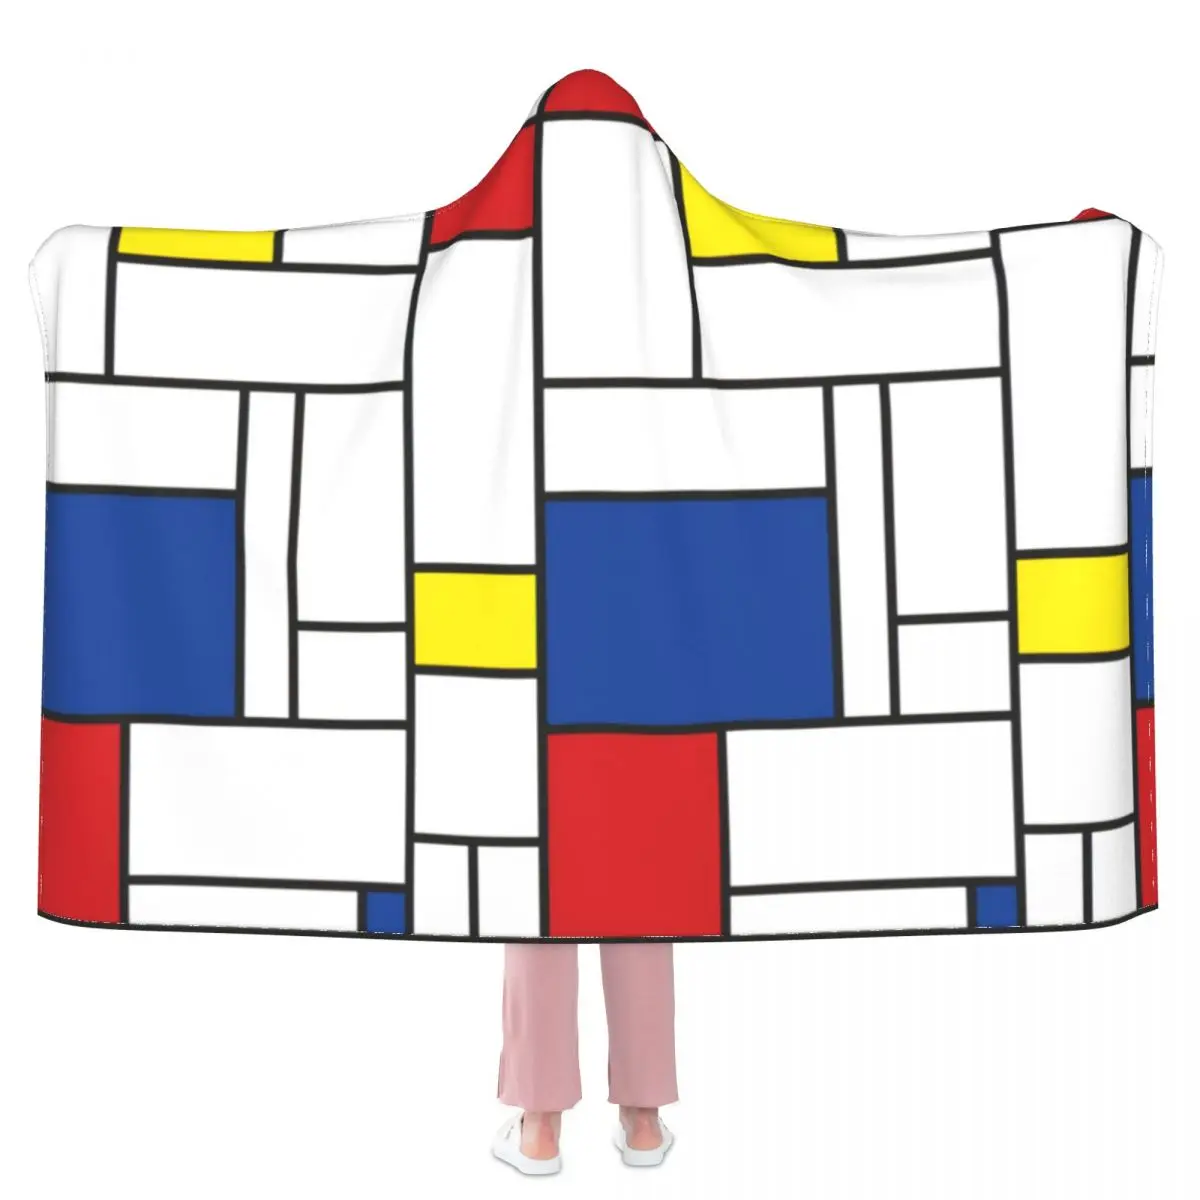 Retro Mod Geometry Blanket Geometric Modern Art Cheap Novelty Hoodie Bedspread Fleece For Photo Shoot Super Soft Blanket